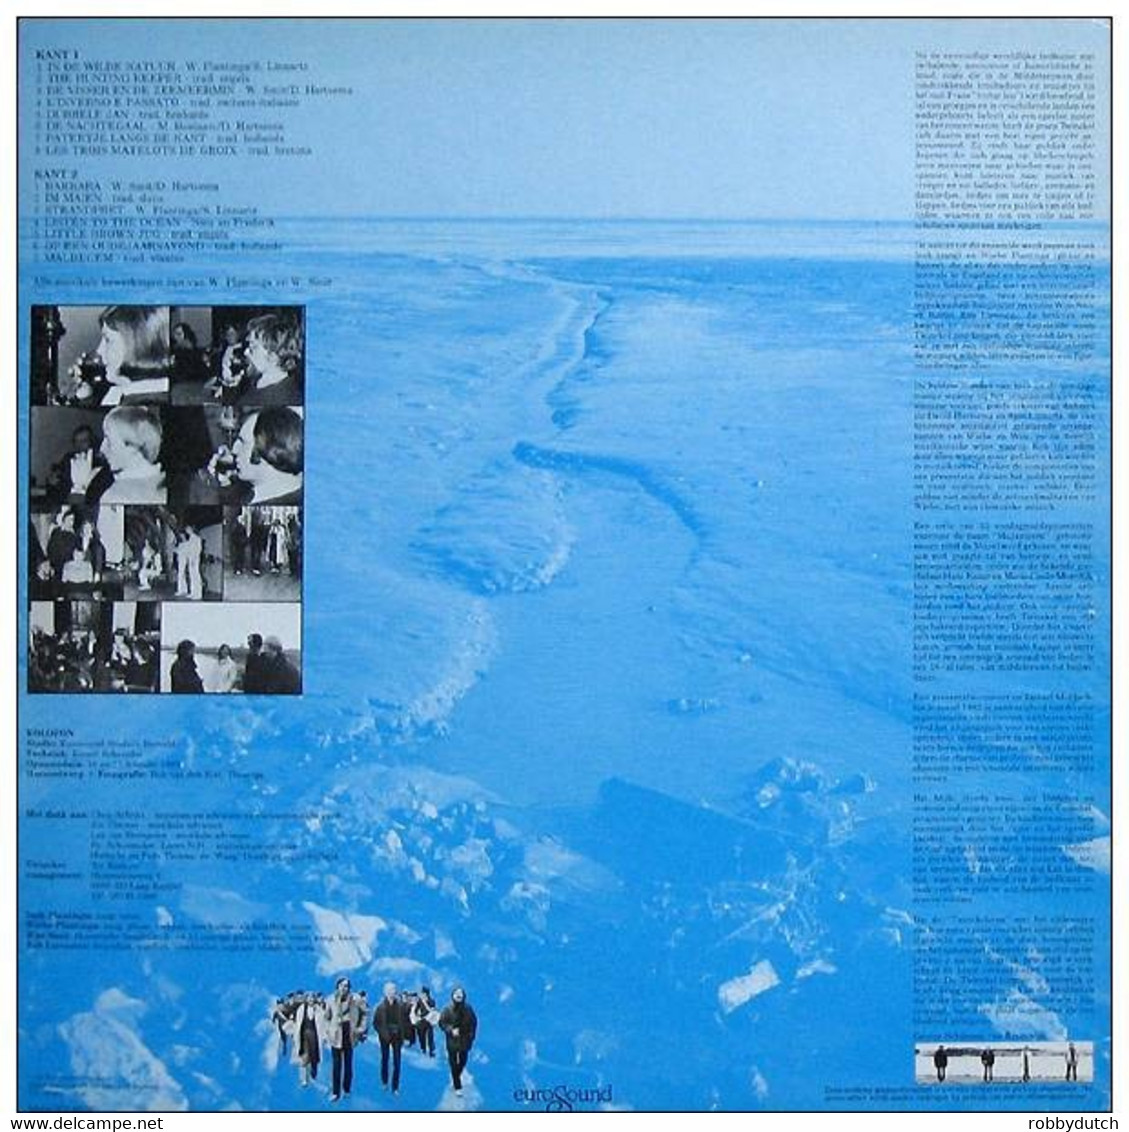 * LP * TWINCKEL - TROBAR LEU (Rare Dutch Folk 1983 Ex!!!) - Country Et Folk